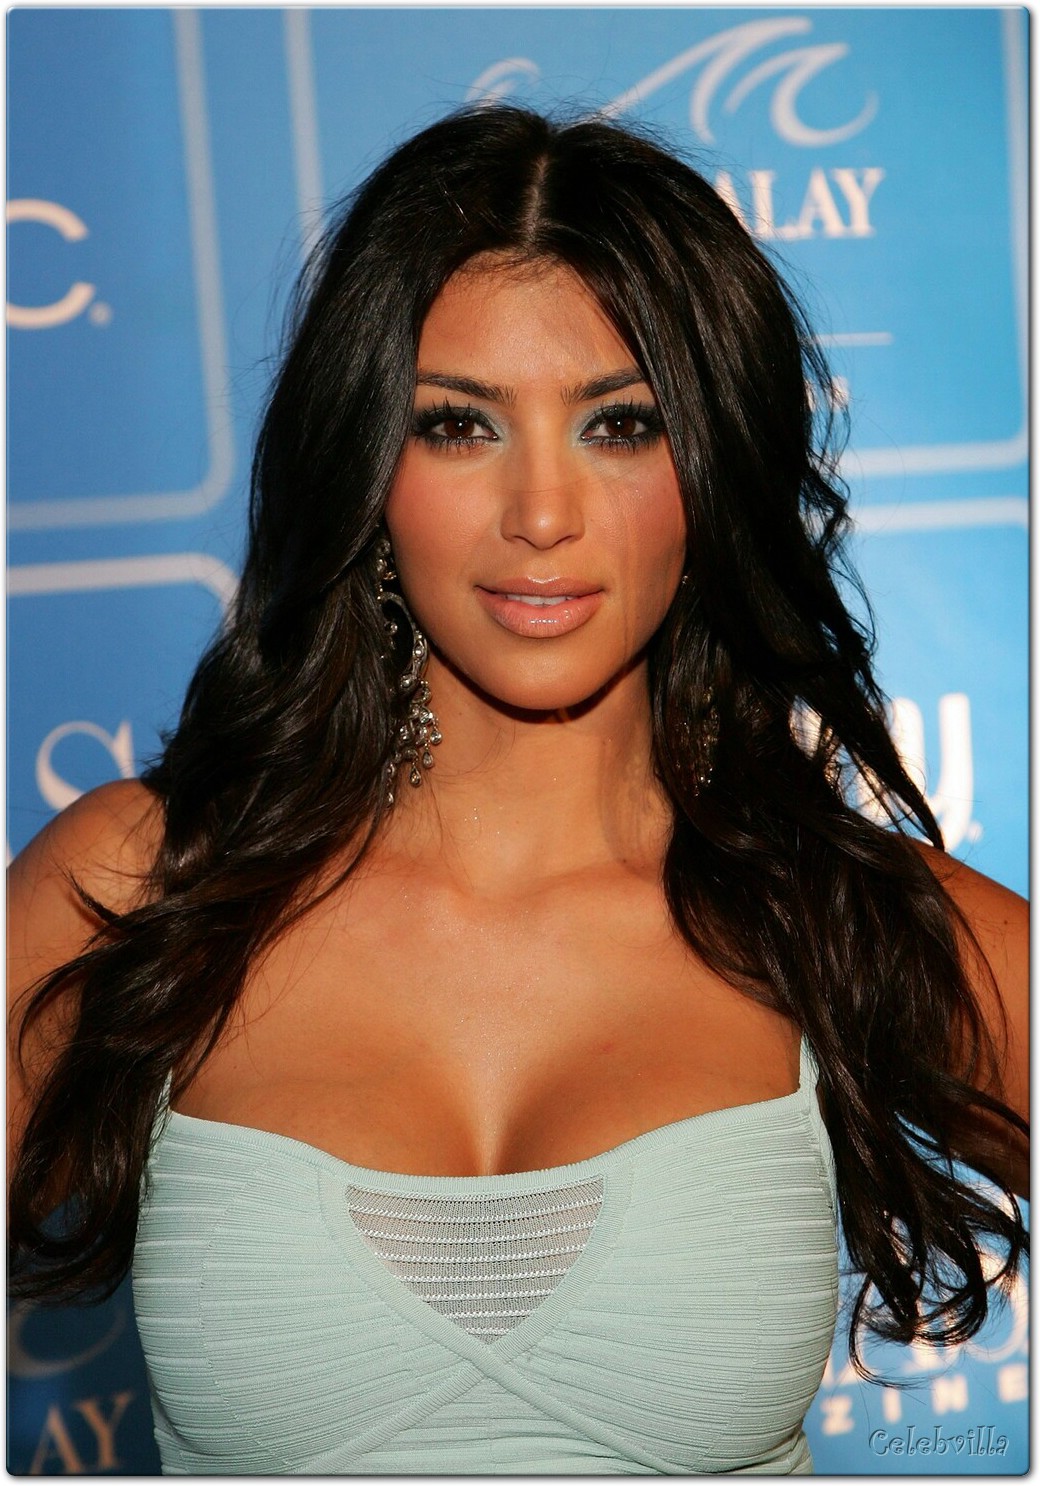 Kim kardashian cleavage pics - Catholic news, solar energy 